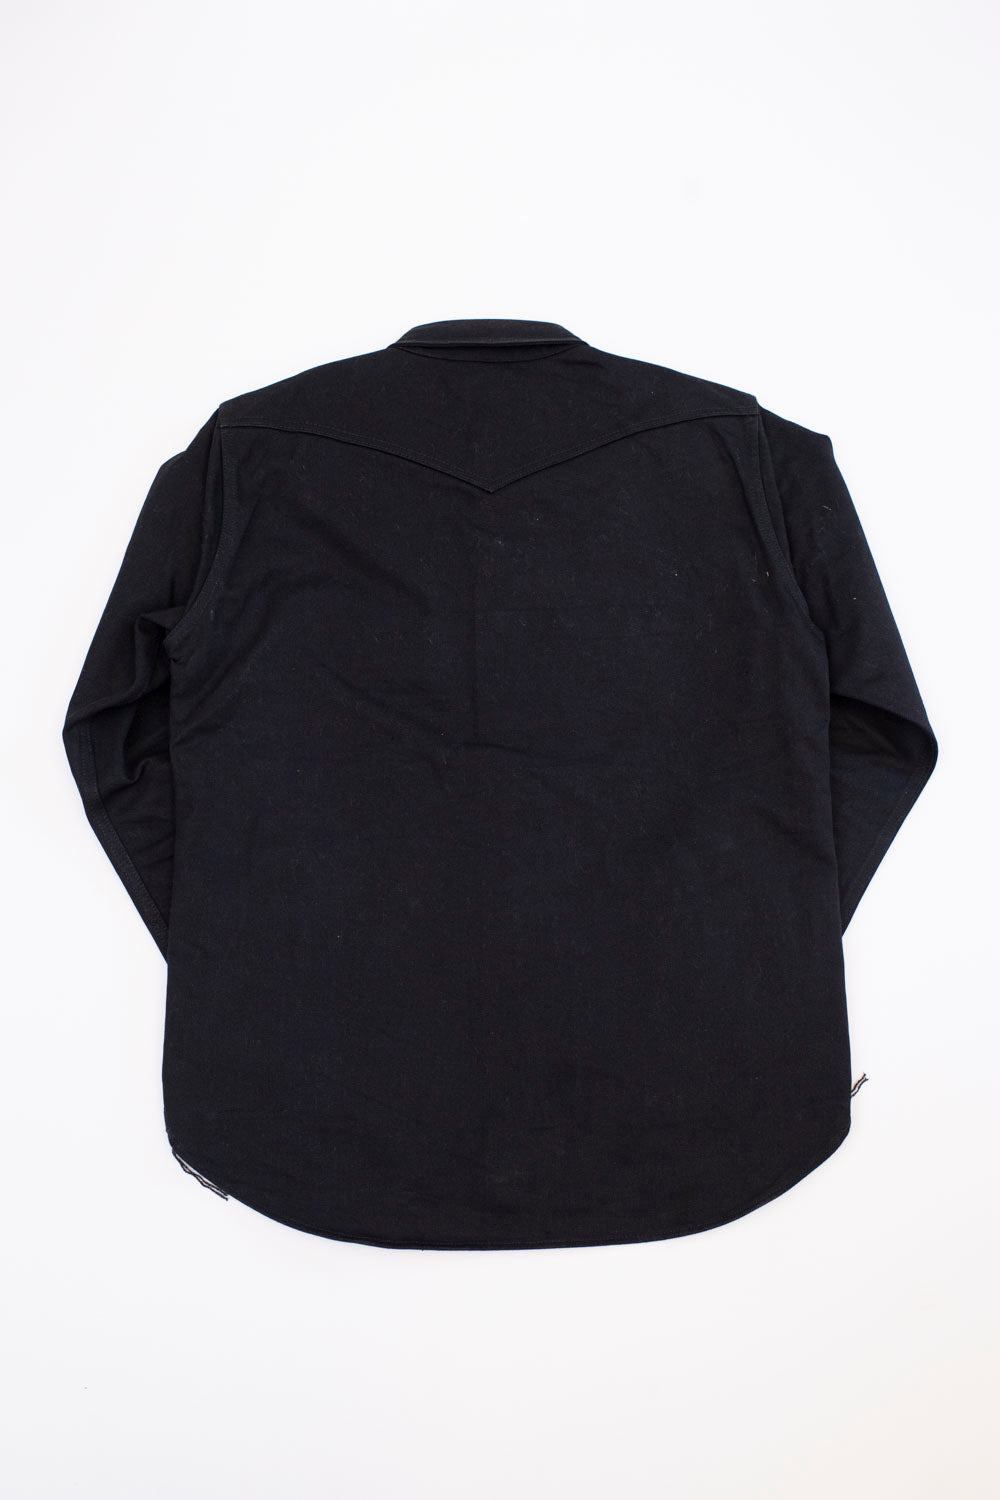 IHSH-362-BLK - 16oz Non-Selvedge Denim CPO Shirt - Superblack (Fades To Grey)